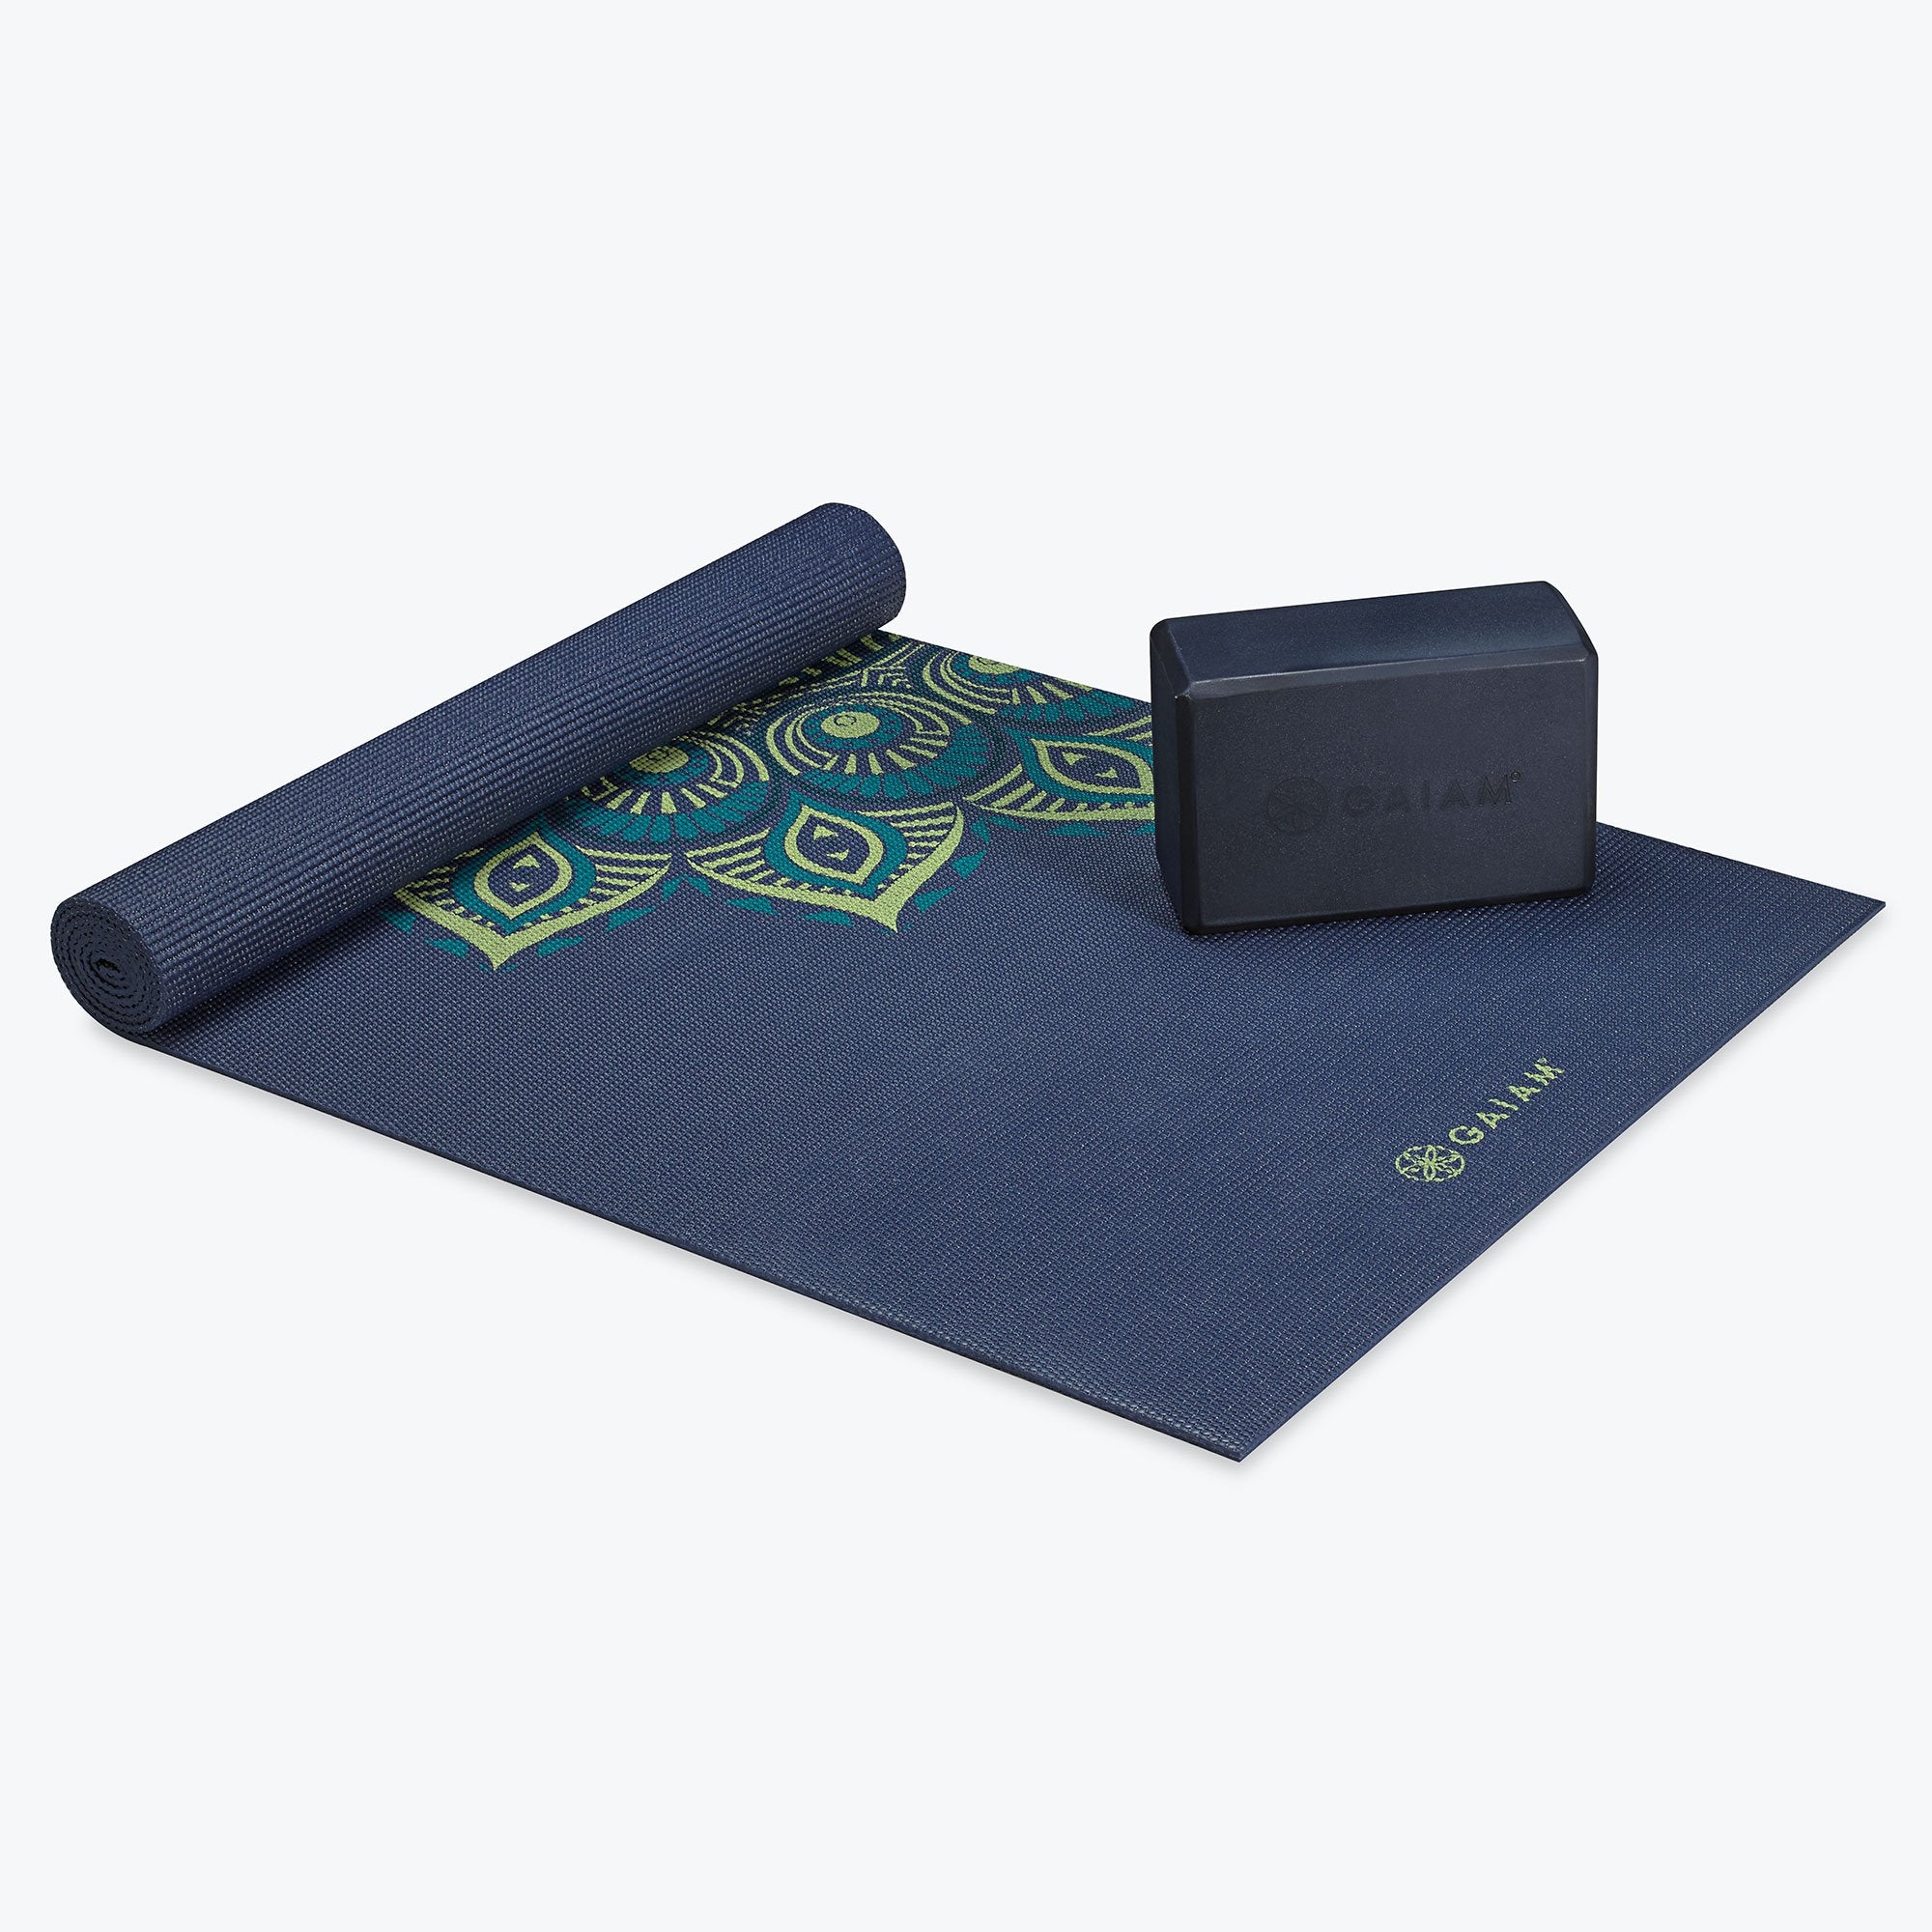 Cushion & Support Yoga Kit